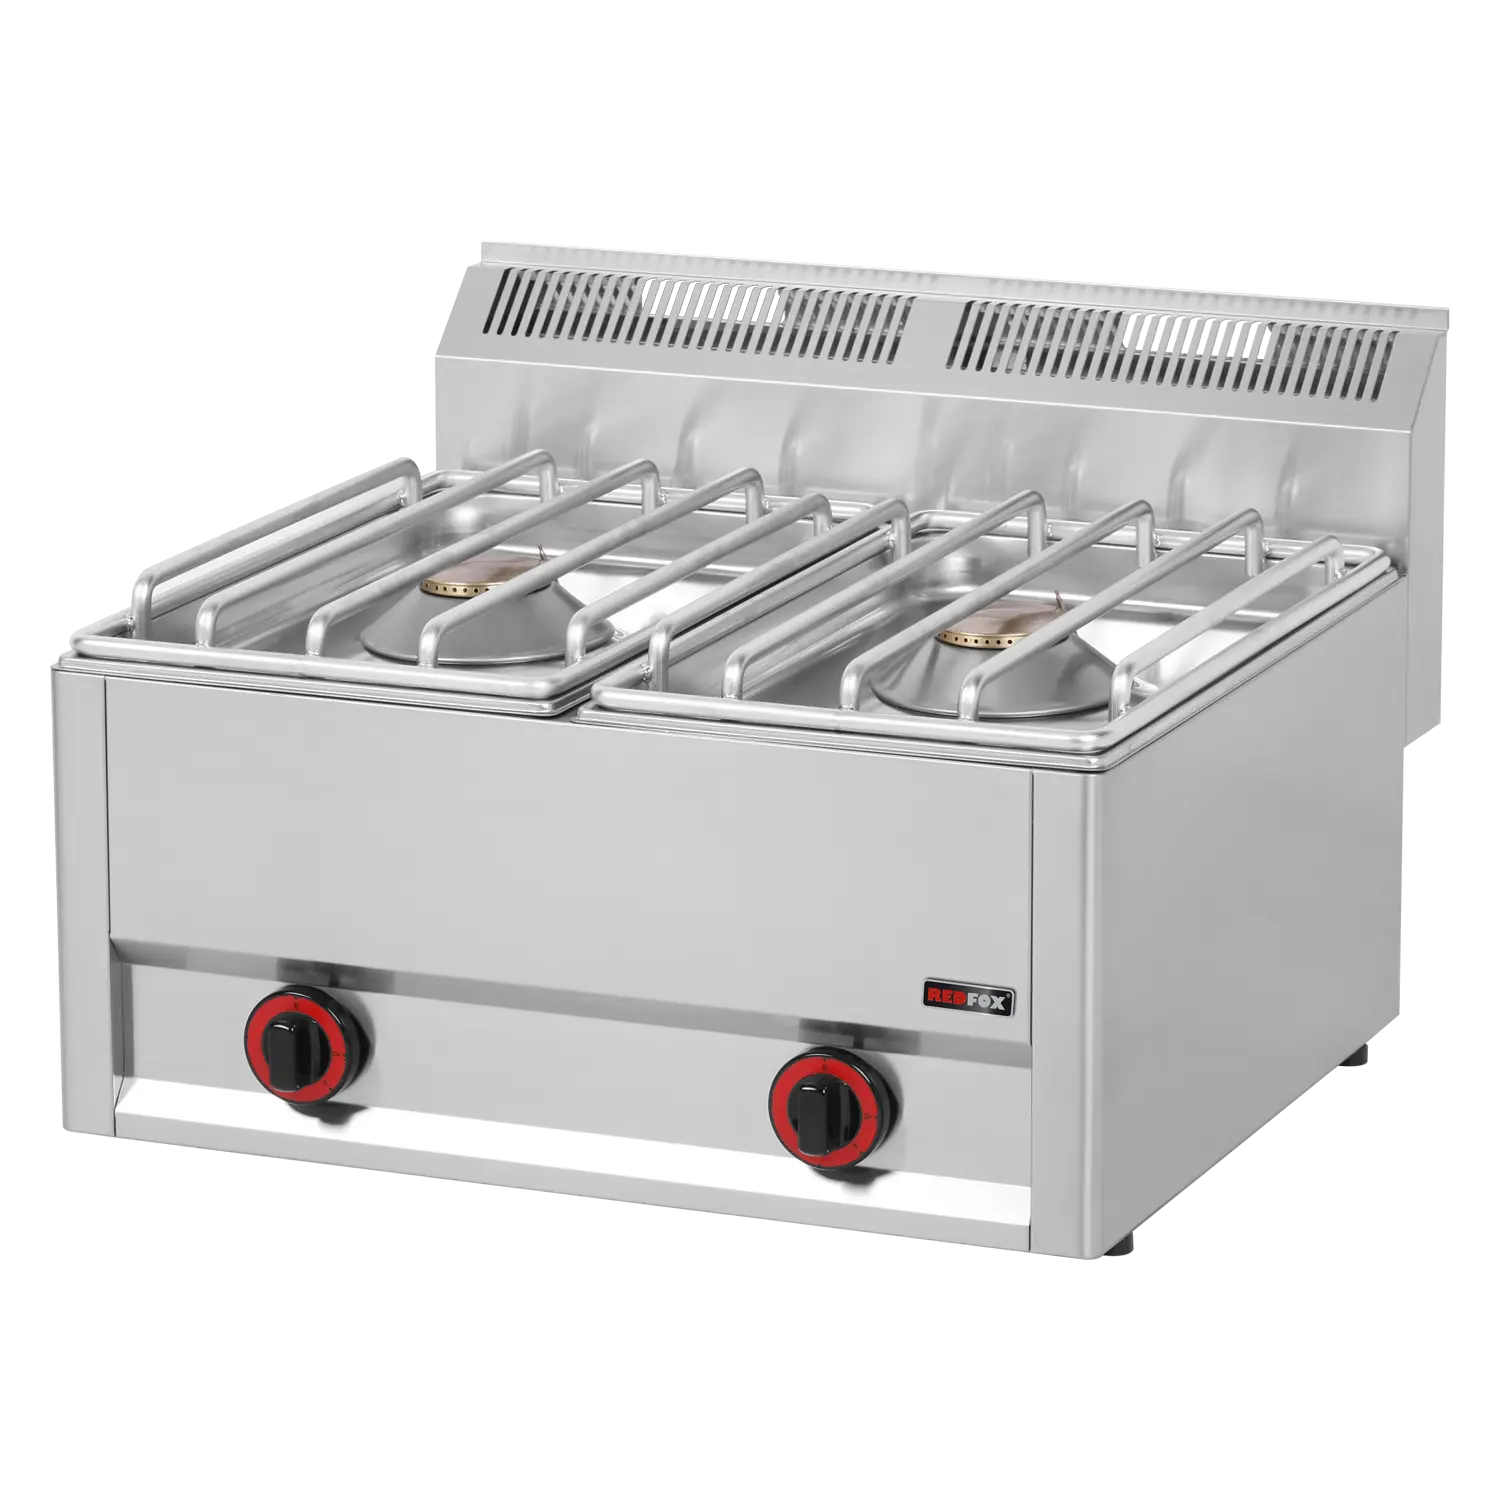 Cooking range gas 2x burner without cabinet | REDFOX - SP 62 GLS